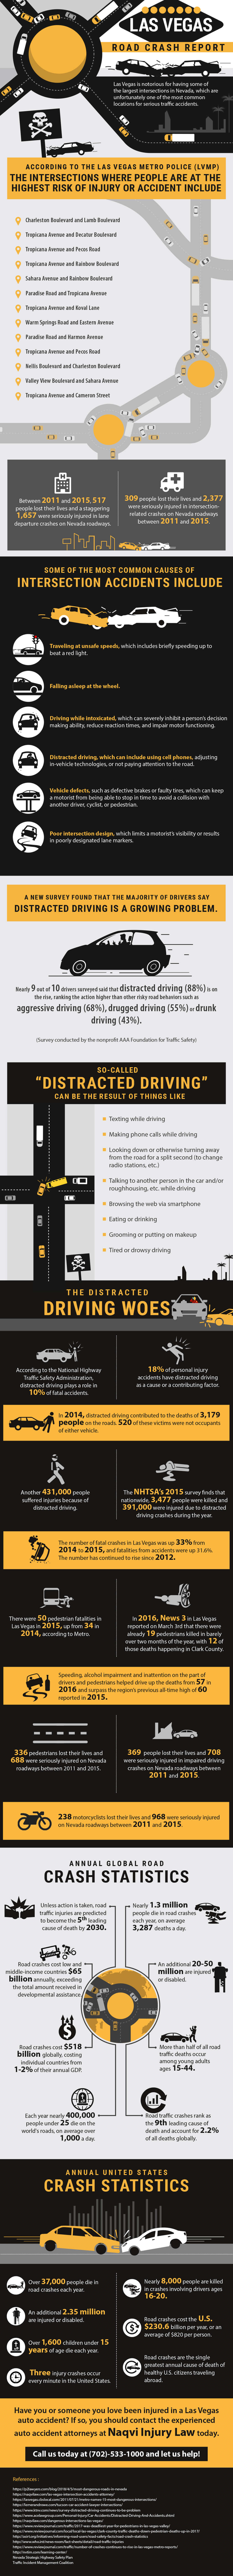 Las-Vegas-Road-Crash-infographic